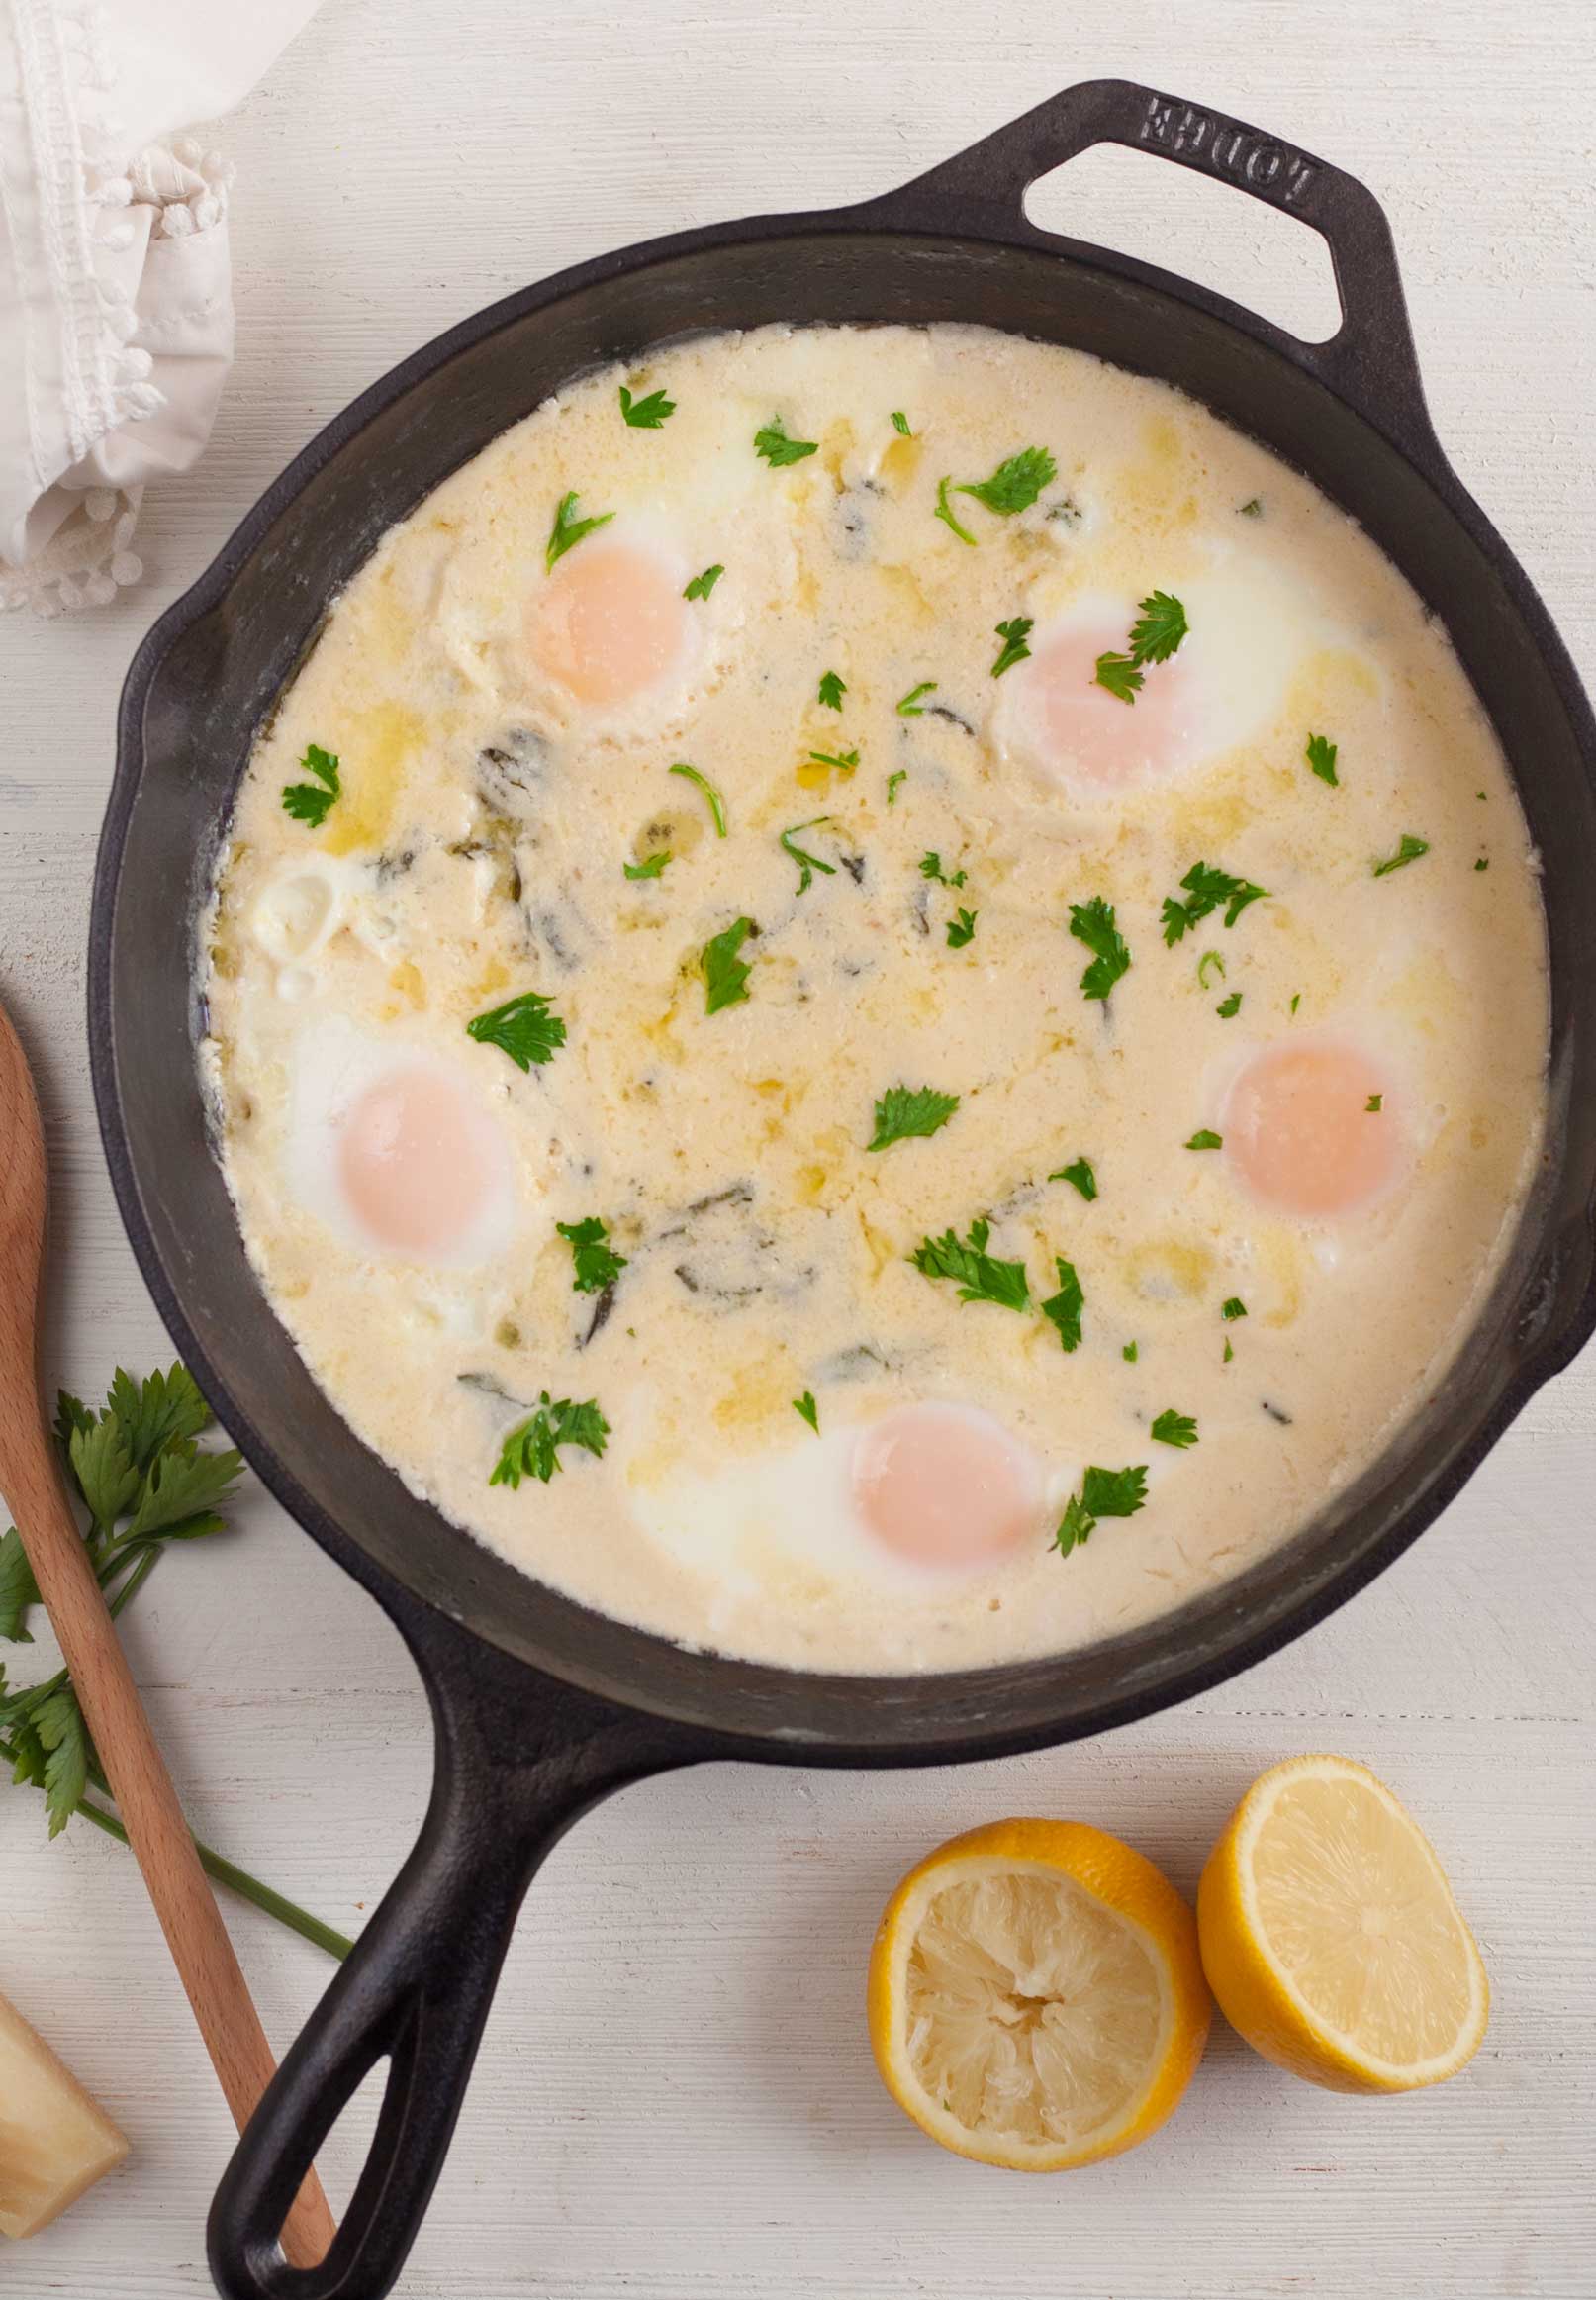 https://bitandbauble.com/wp-content/uploads/2019/08/easy-one-pan-skillet-eggs-florentine-breakfast-recipe-4.jpg